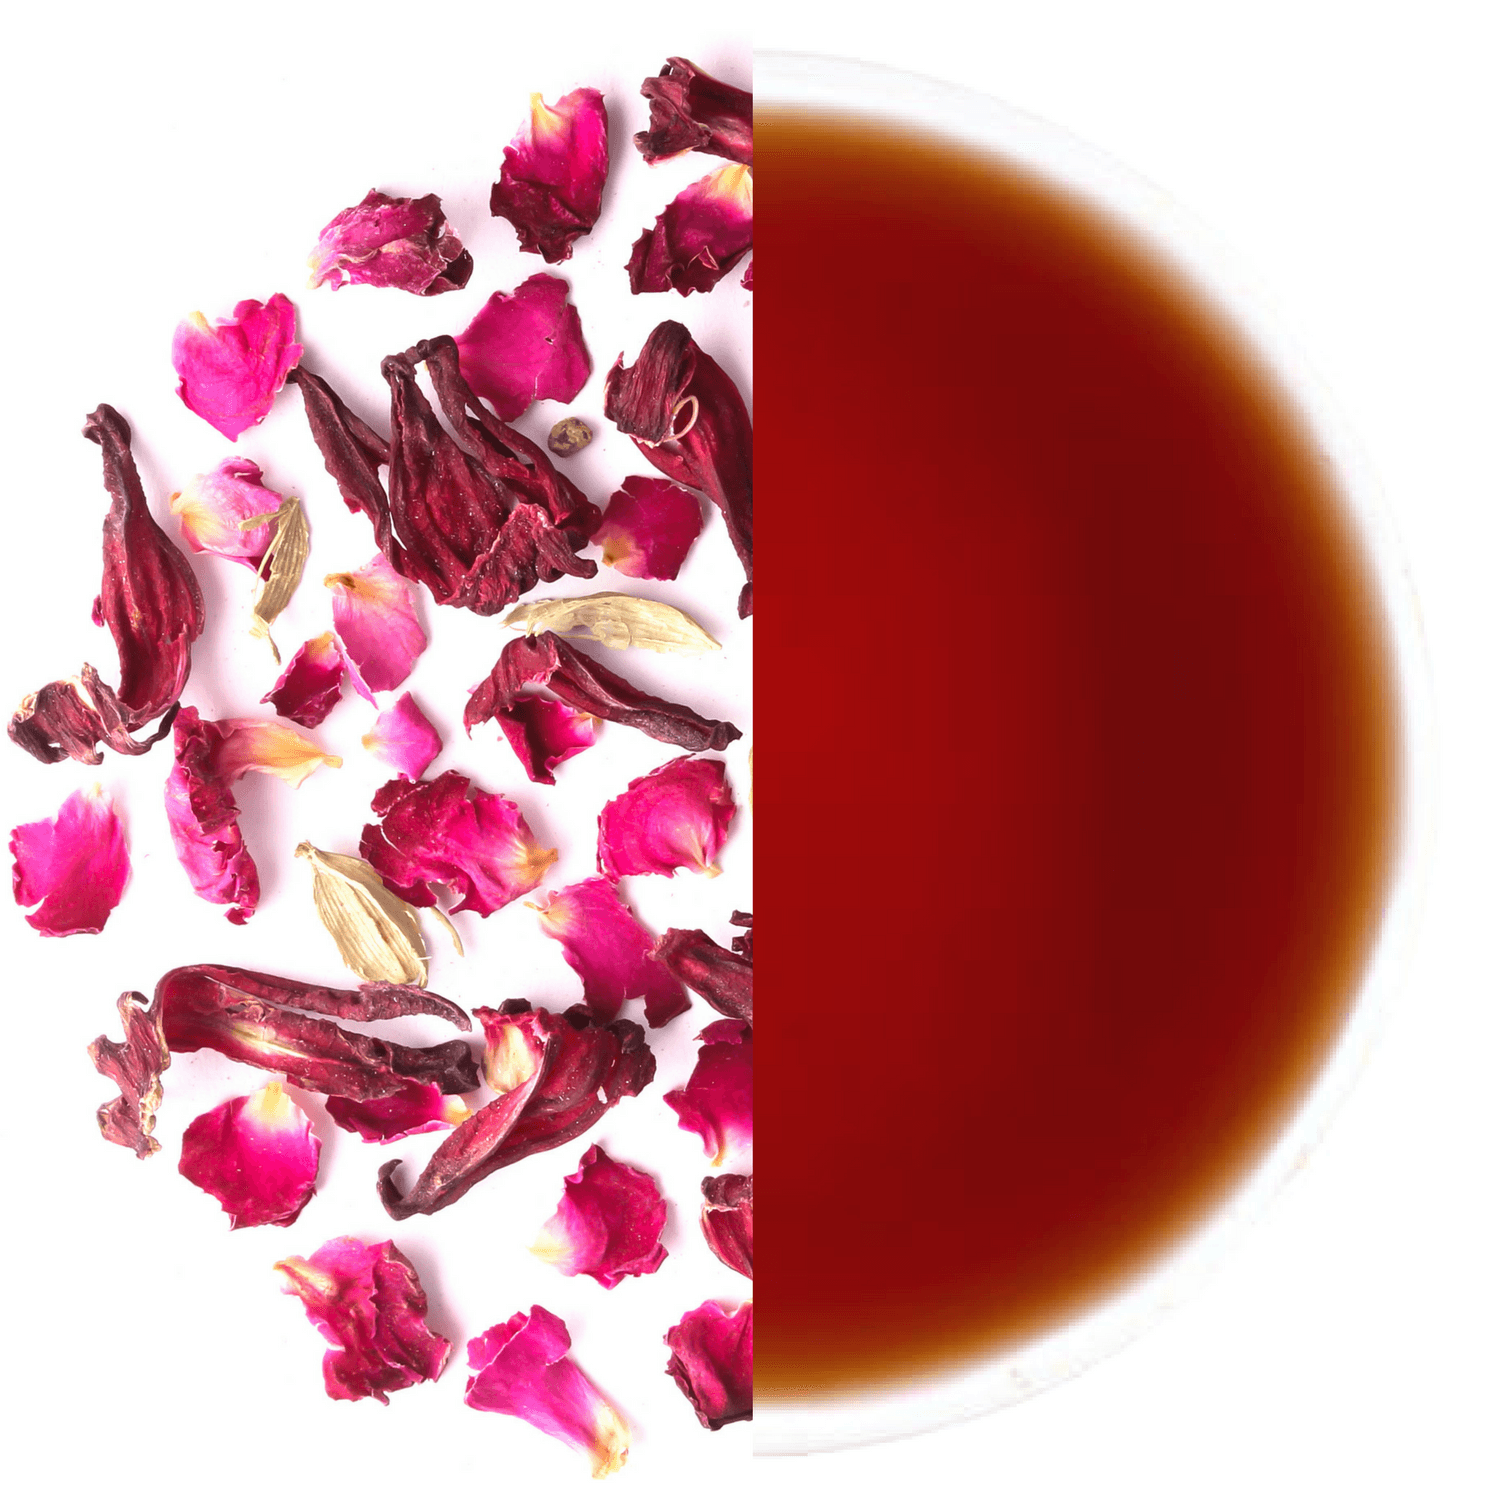 Hibiscus Rose Refresher - Herbal Tisane - Tearaja